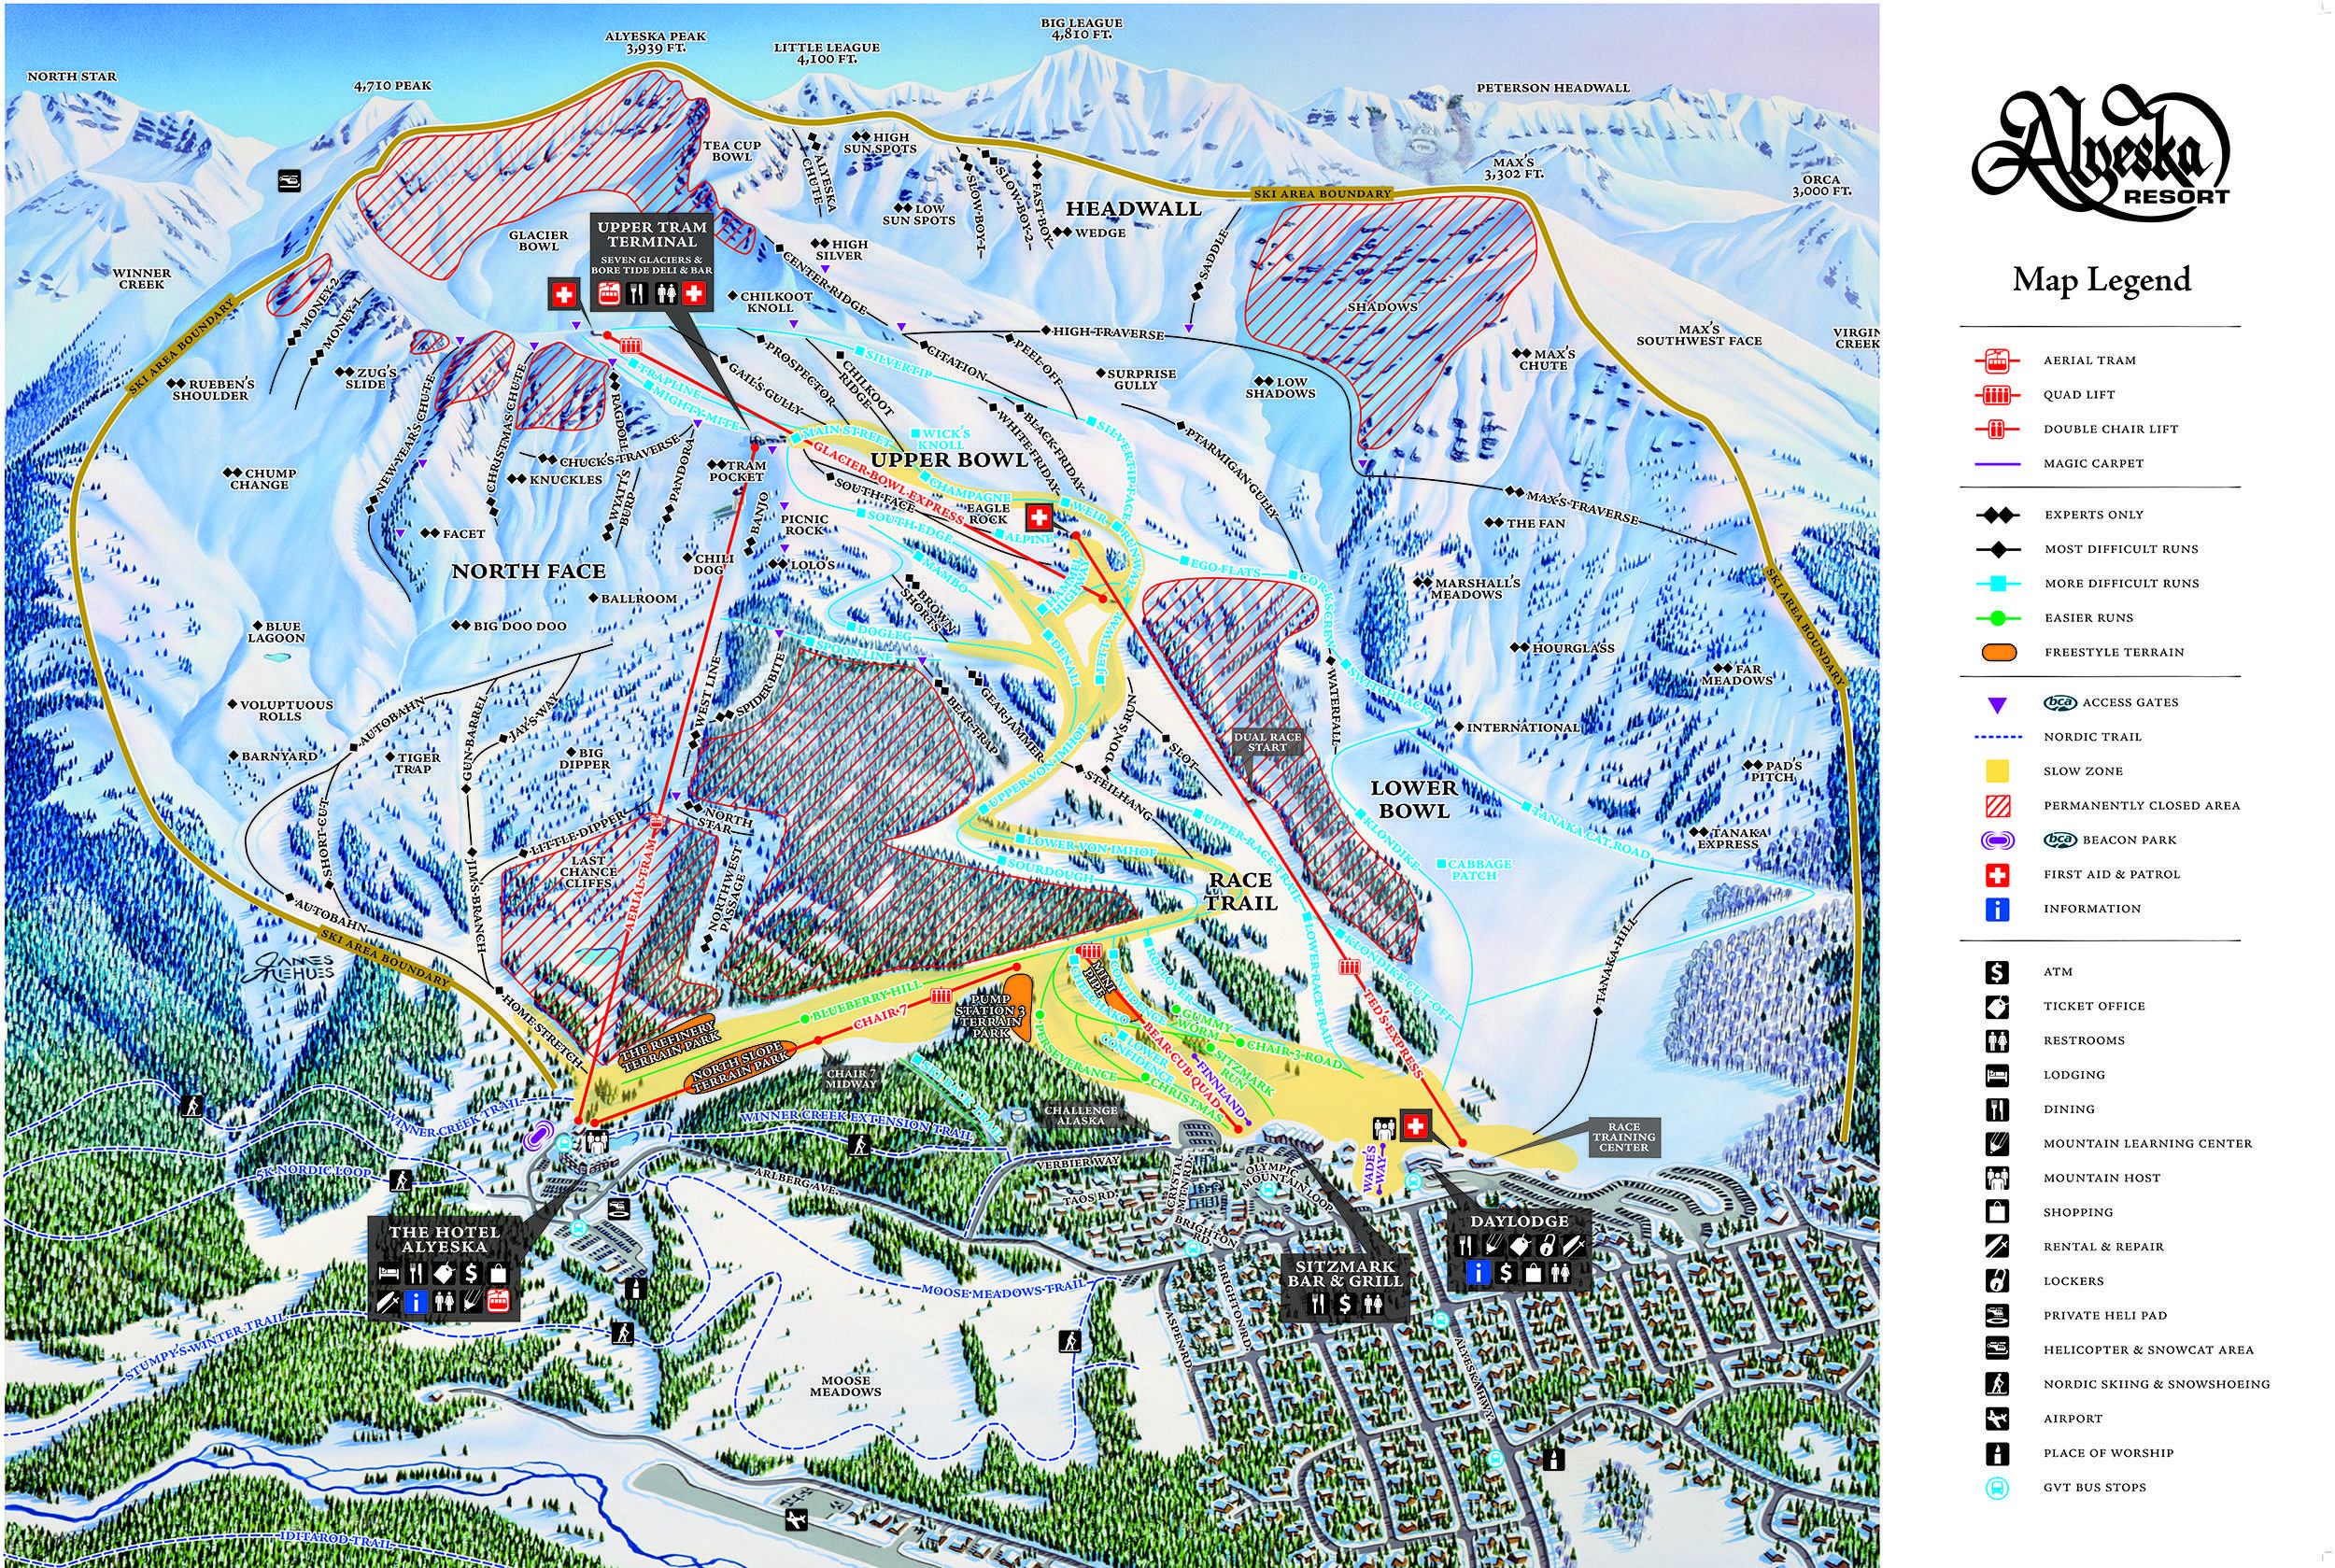 Trail Map for winter operations at Alyeska Resort.